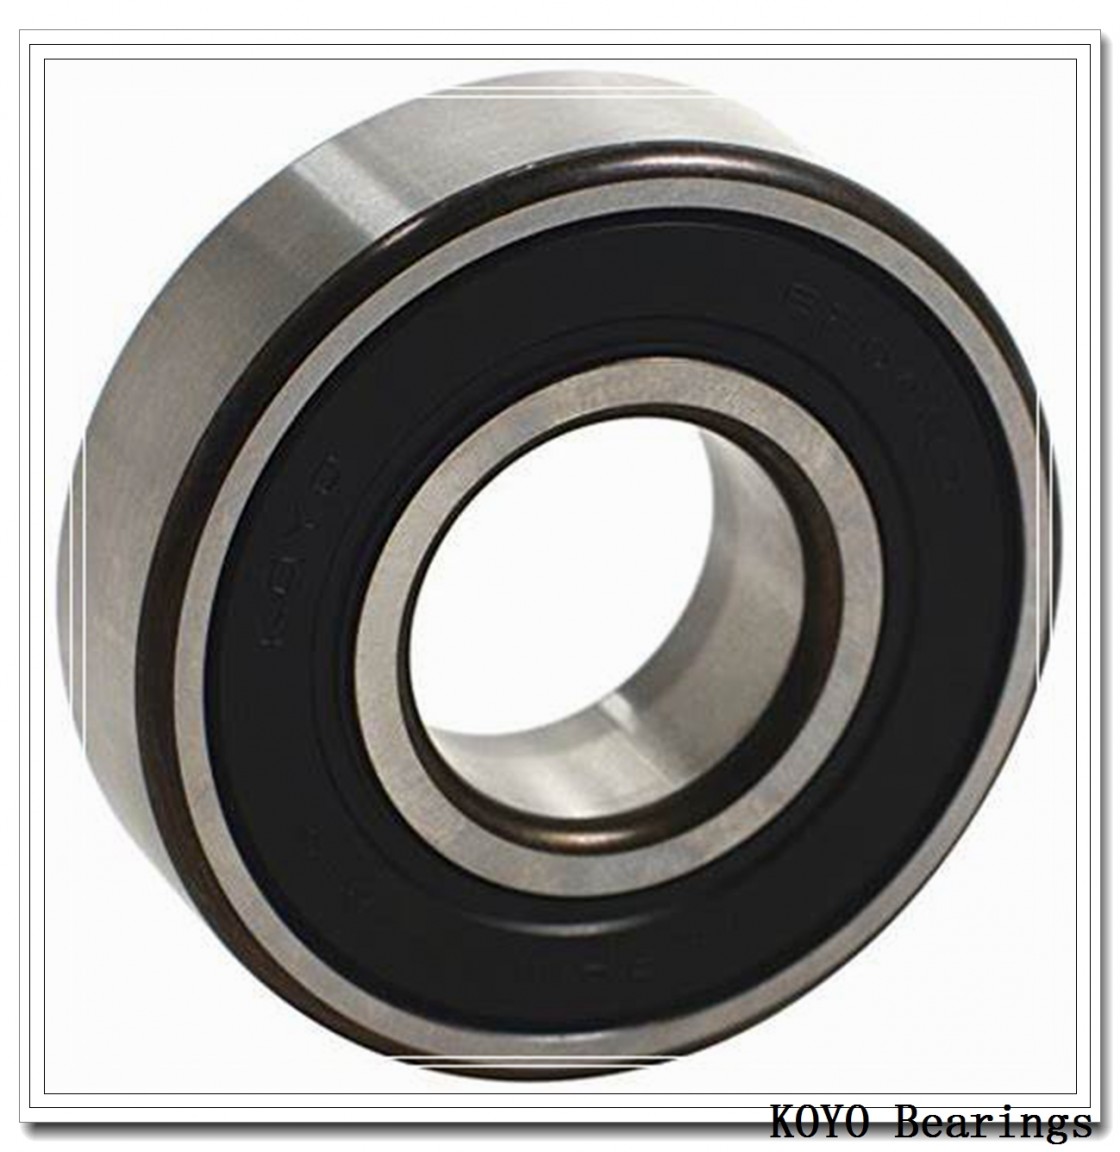 Toyana K52x60x24 needle roller bearings